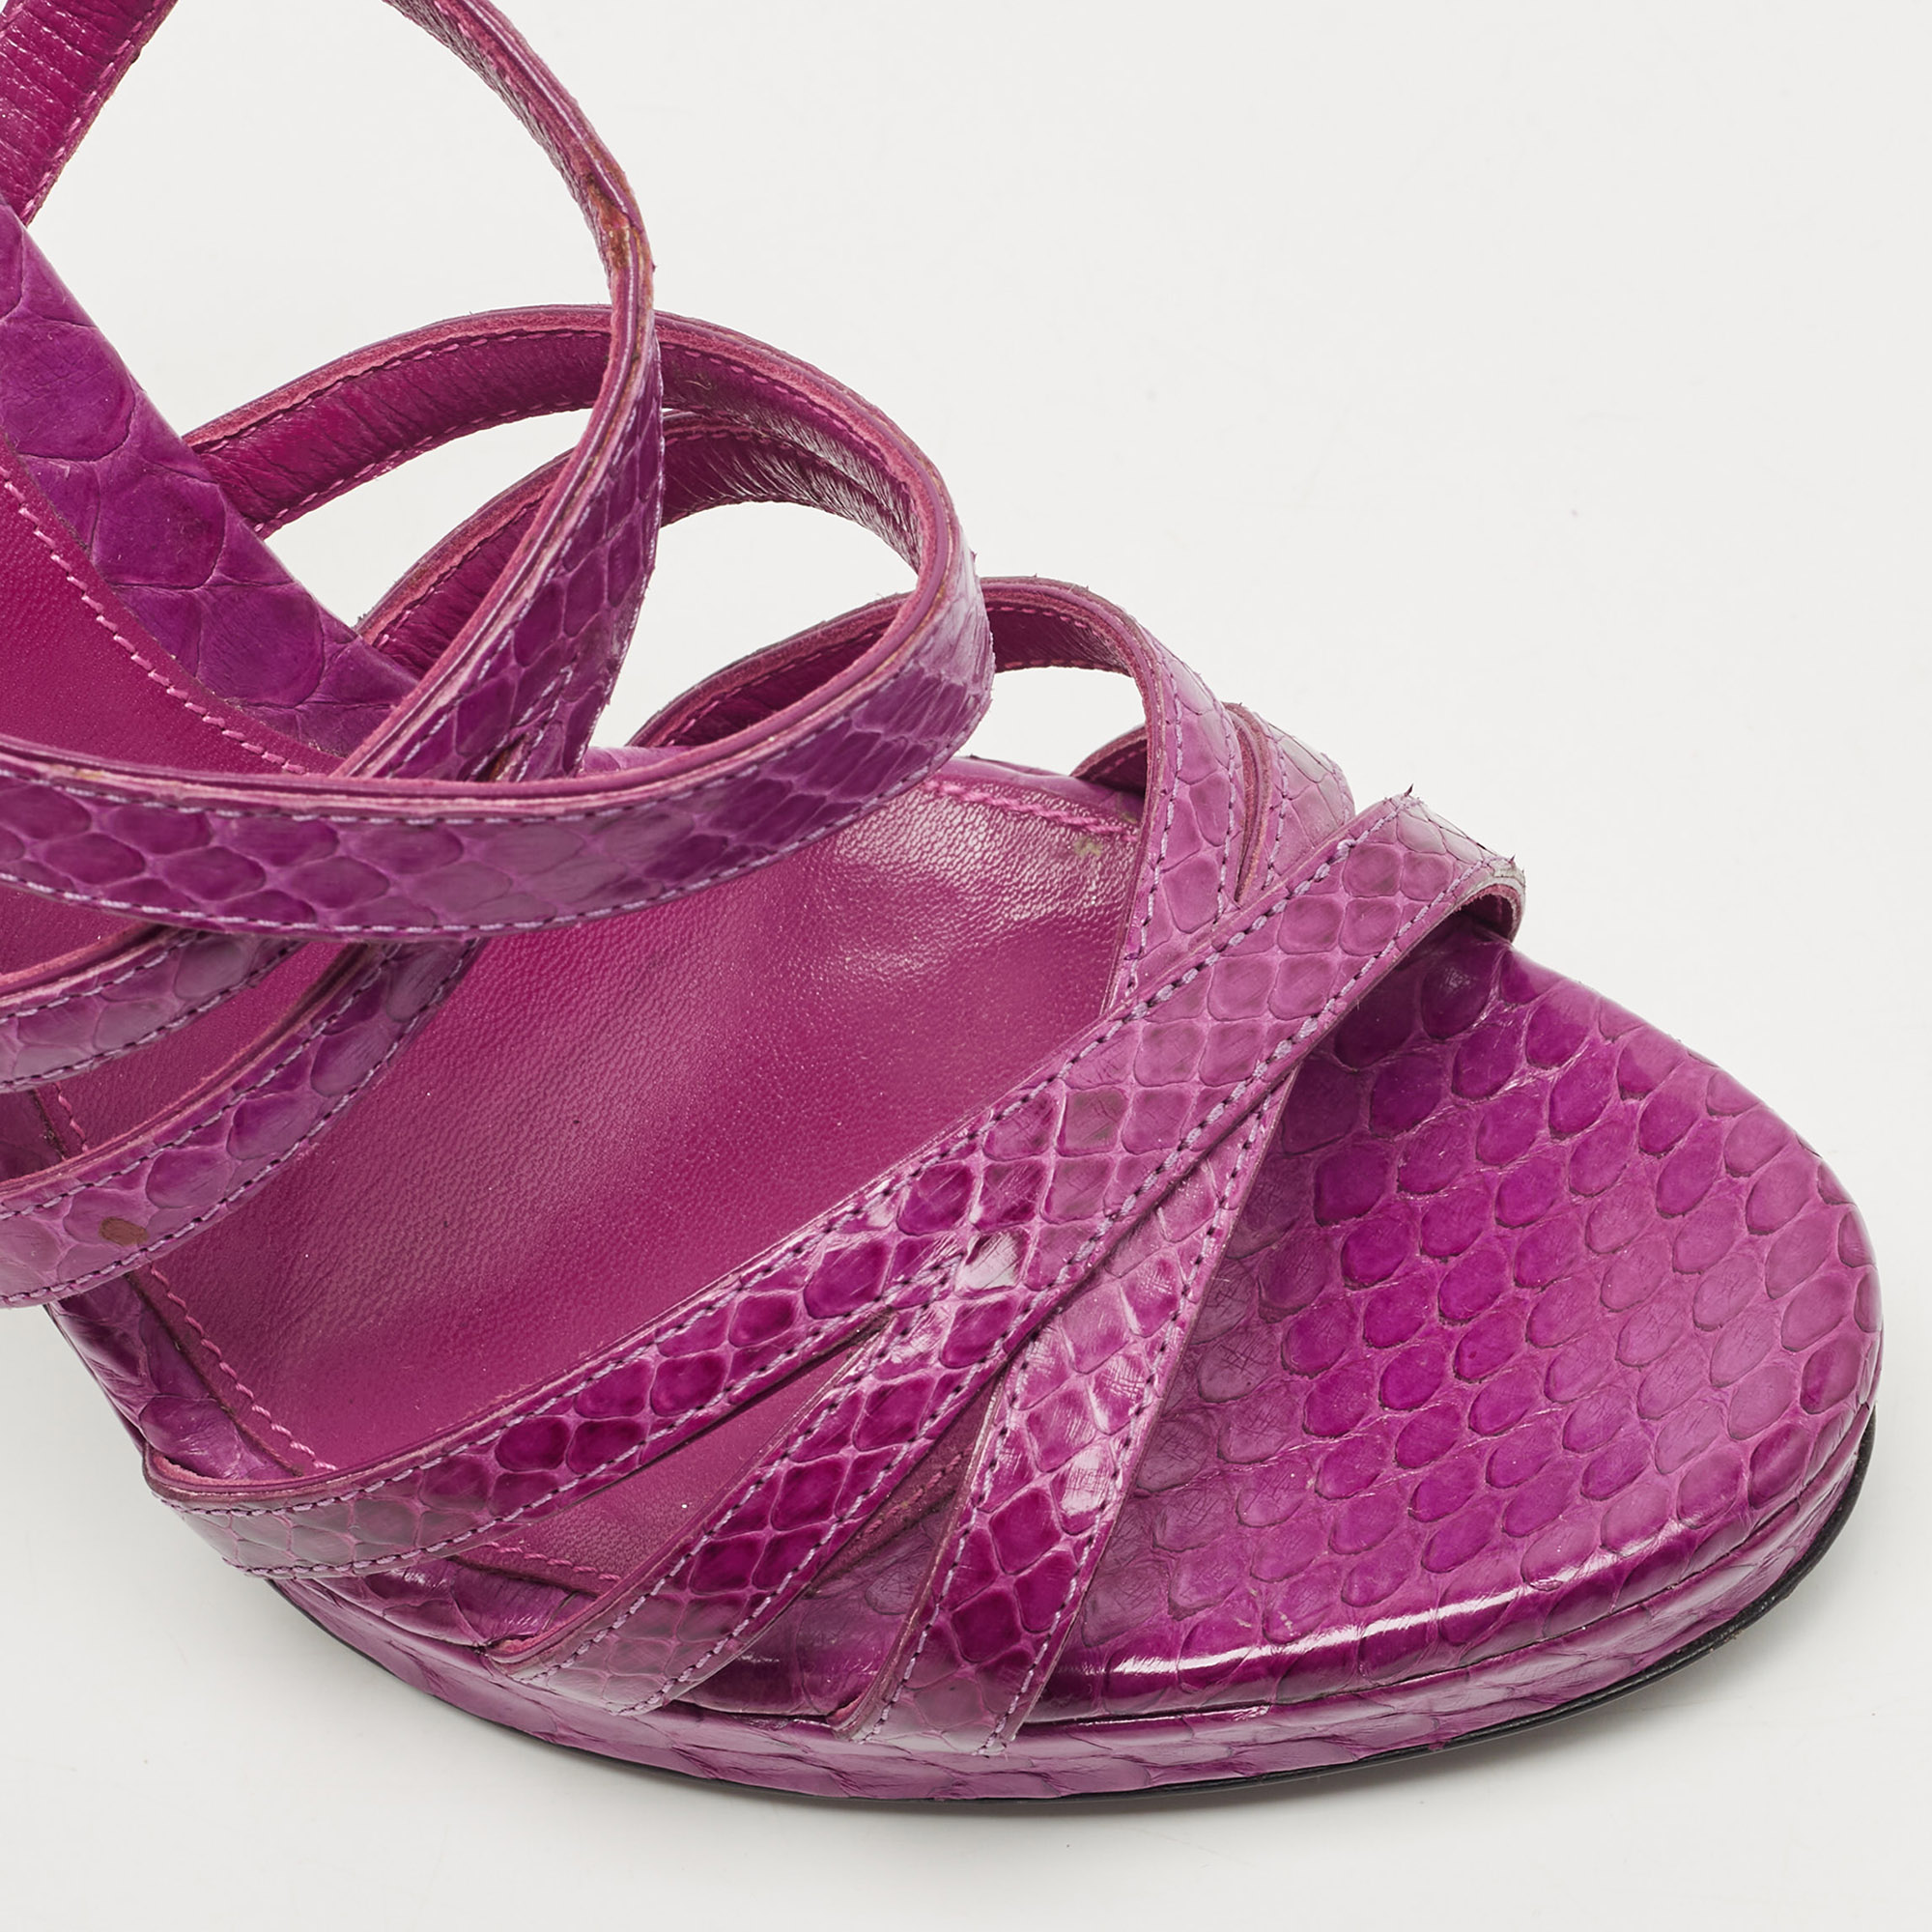 Sergio Rossi Purple Watersnake Leather Strappy Platform Sandals Size 39